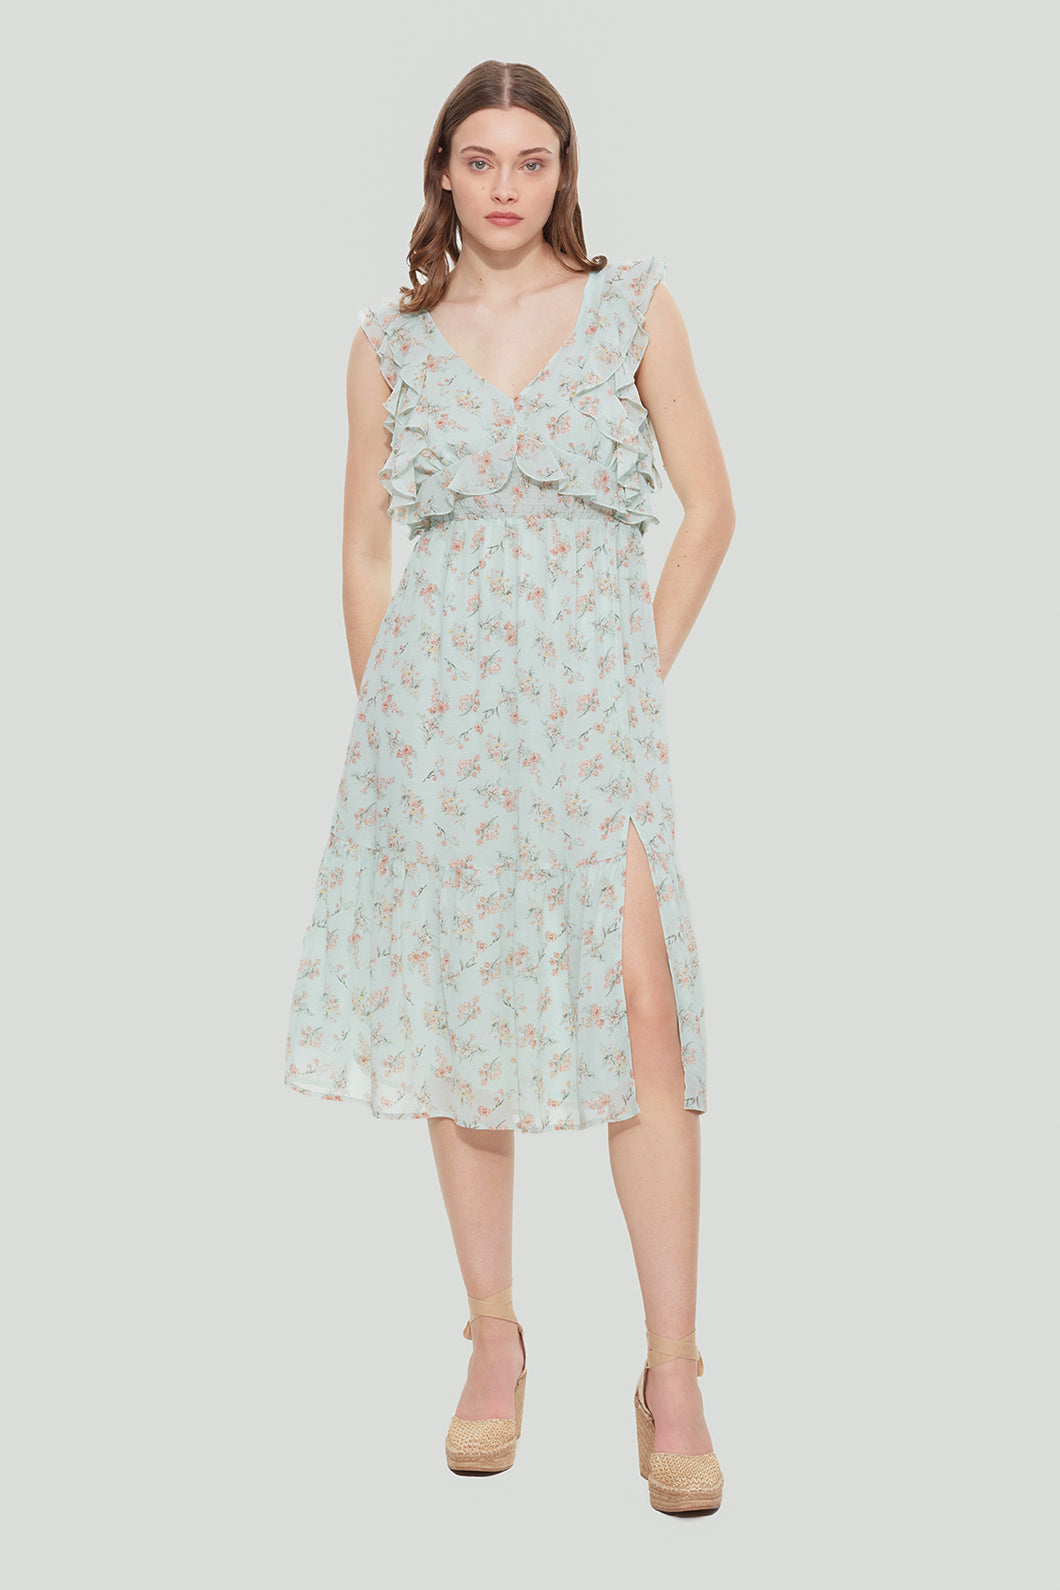 Mint Floral Ruffled Dress